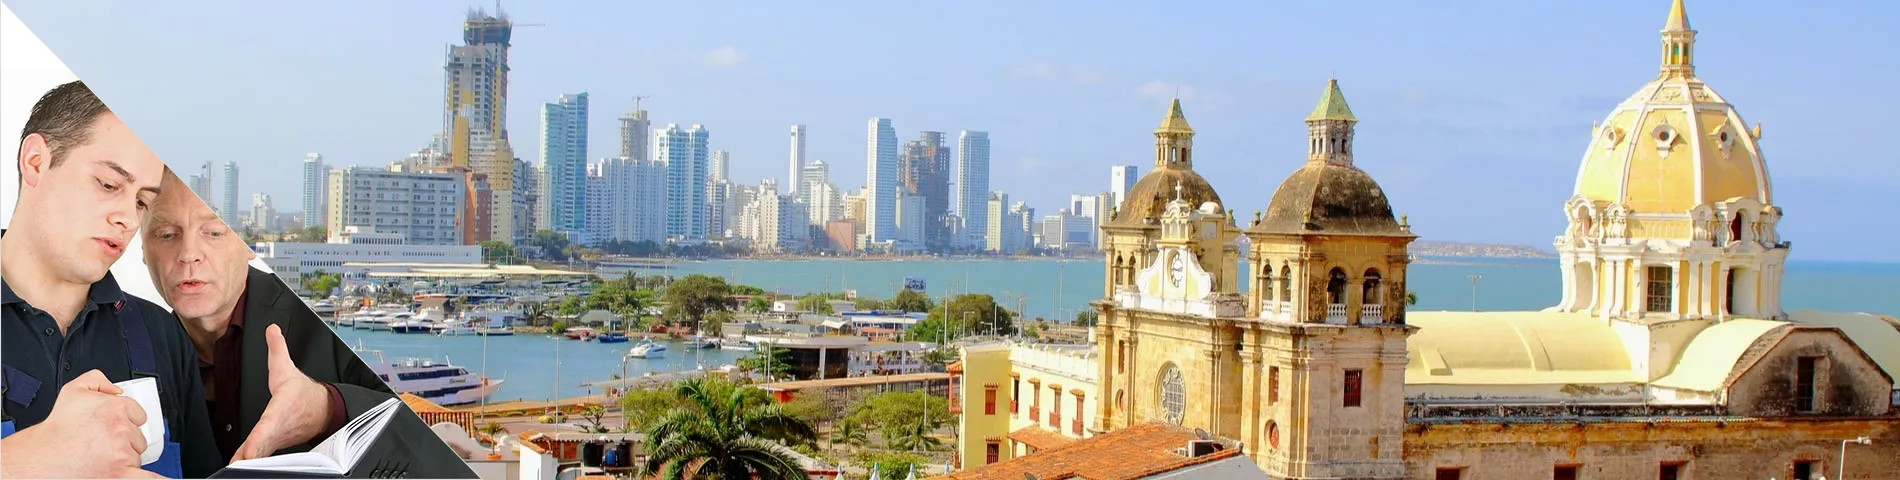 Cartagena - Clases Particulares